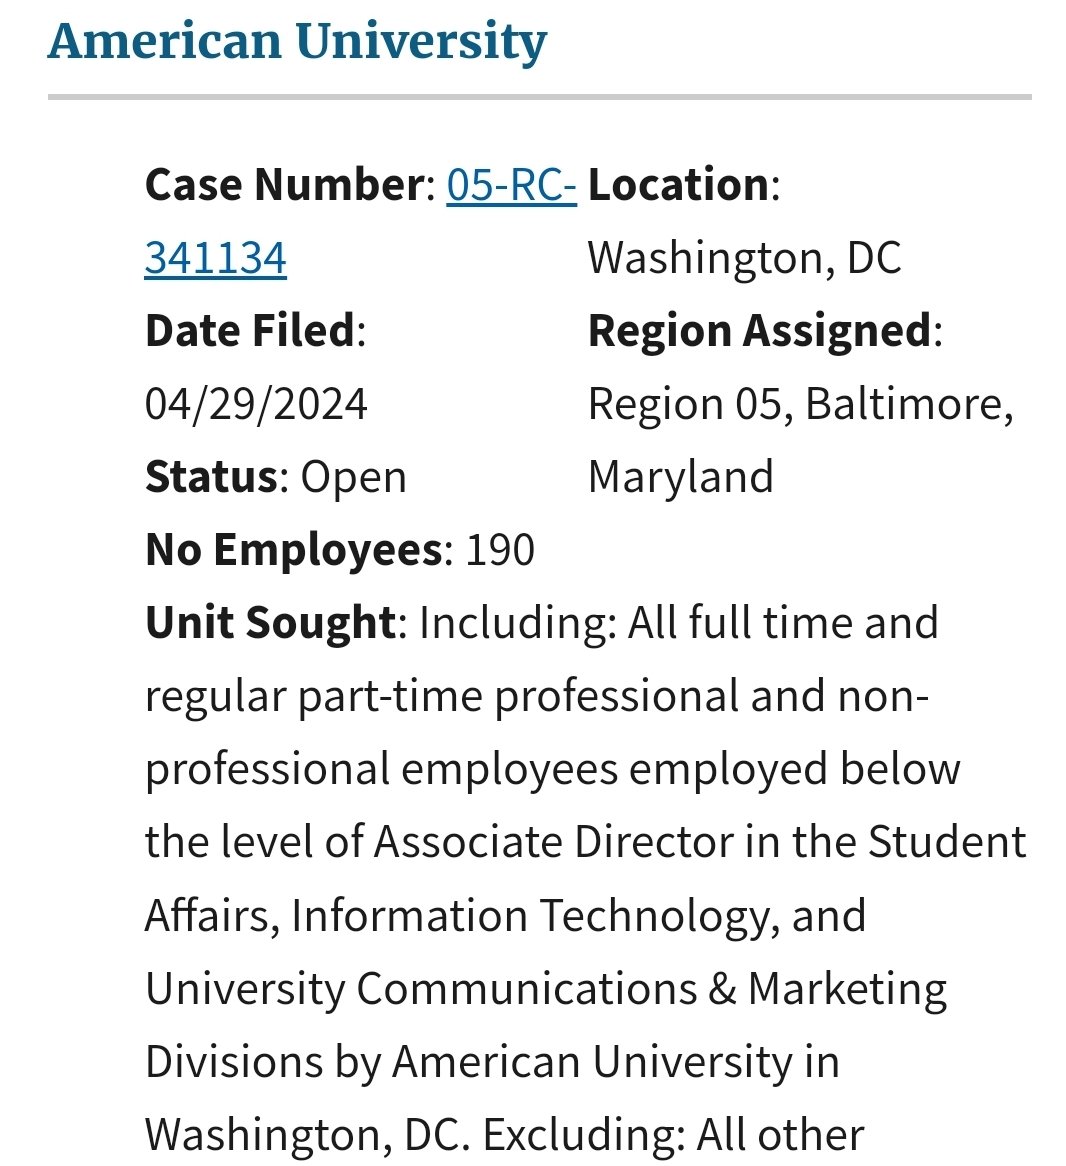 NEW: 190 staff at American Univeristy are unionizing with @SEIU @SEIULocal500.